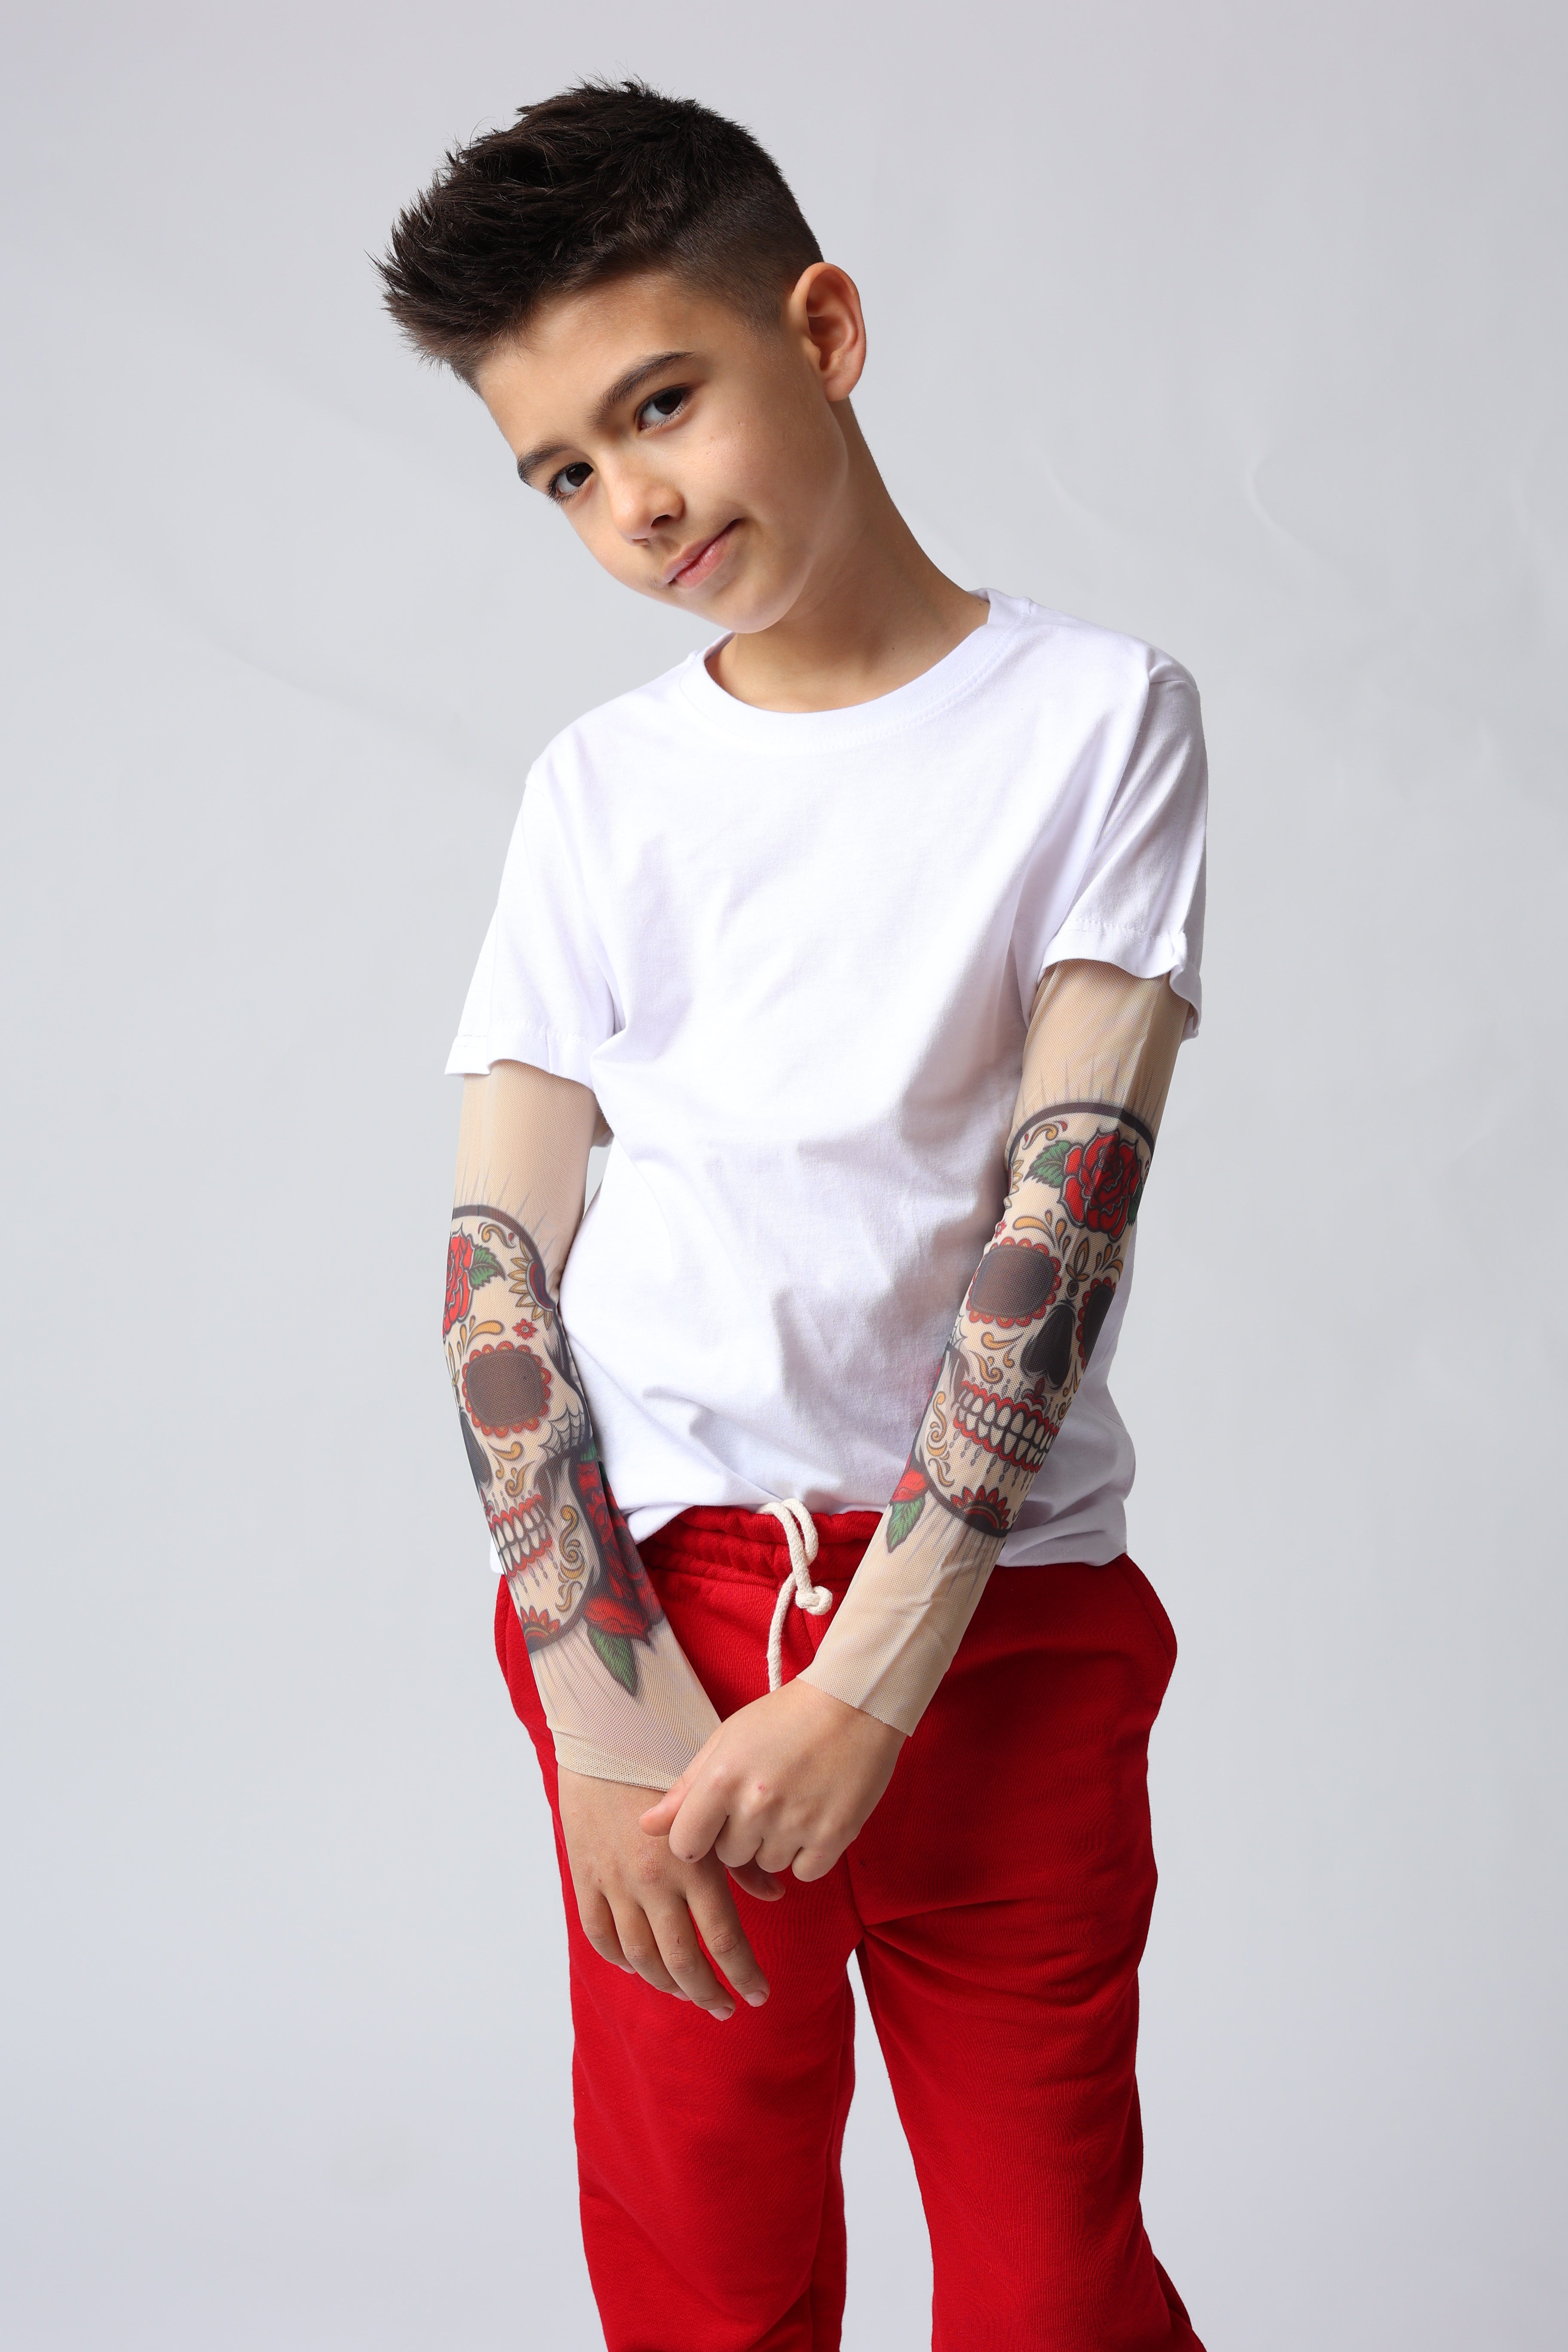 Tricou tatuaje Infinity - unisex pentru copii si adulti - Alb / Negru / Gri / Rosu